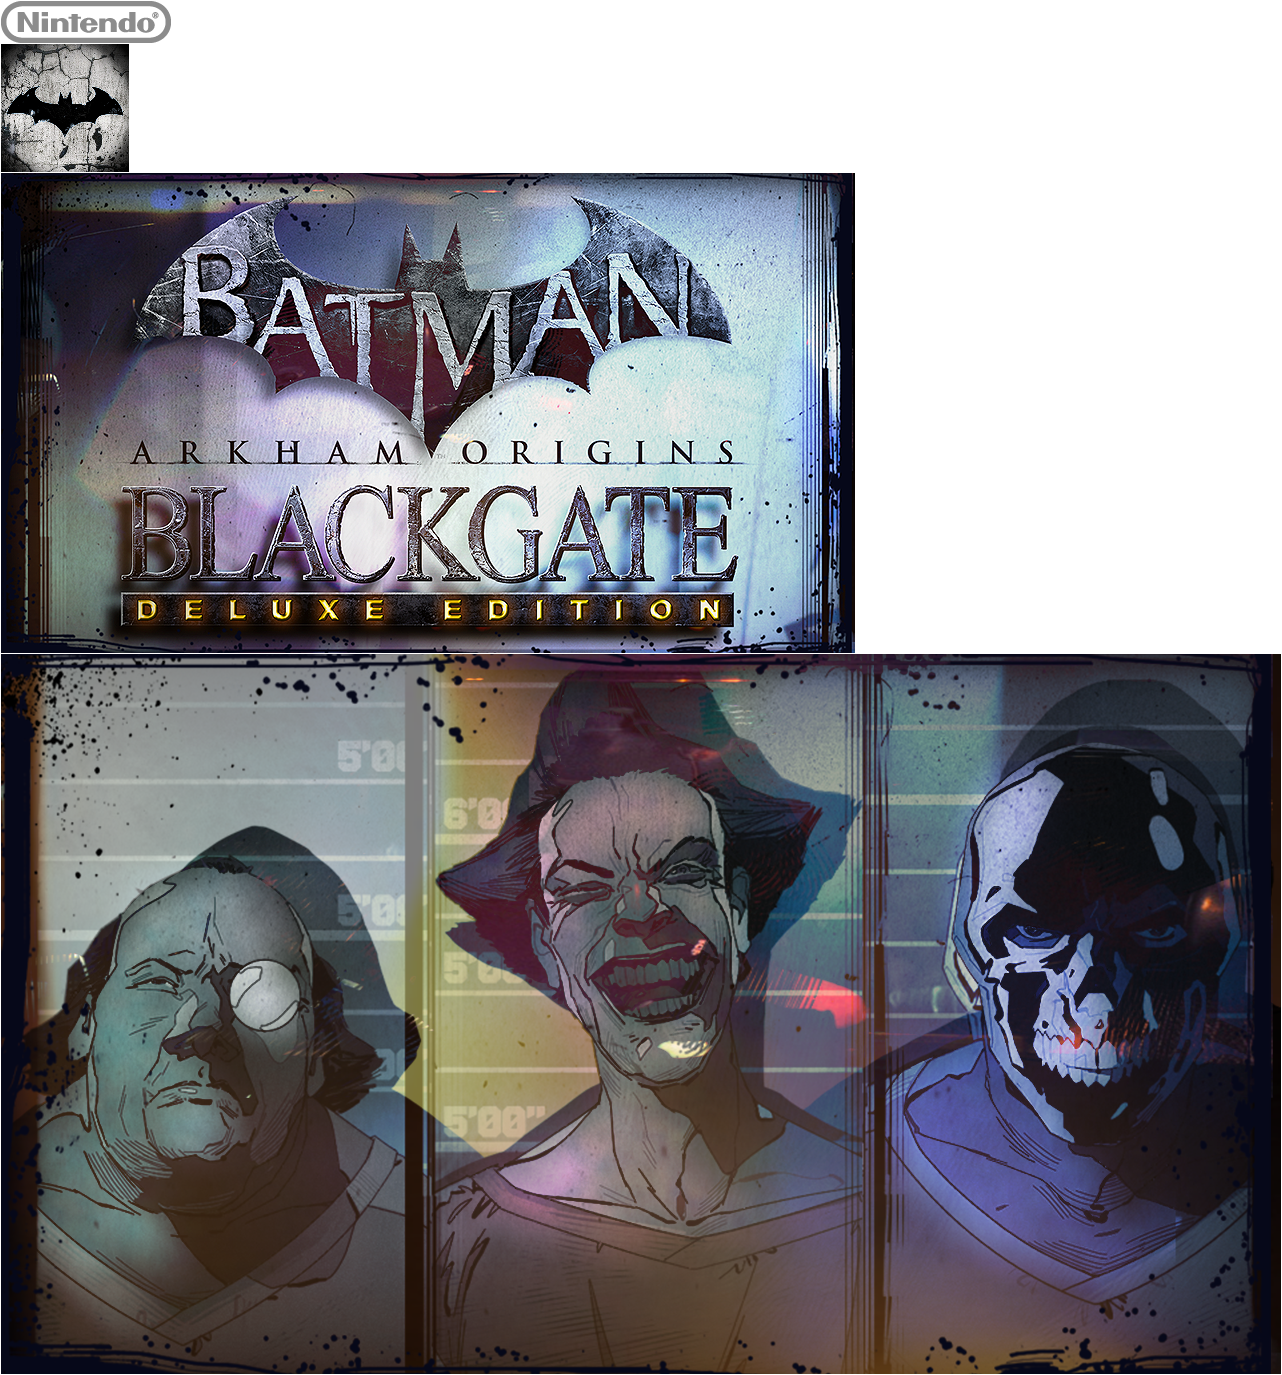 Batman: Arkham Origins Blackgate Deluxe Edition - HOME Menu Icon & Banners